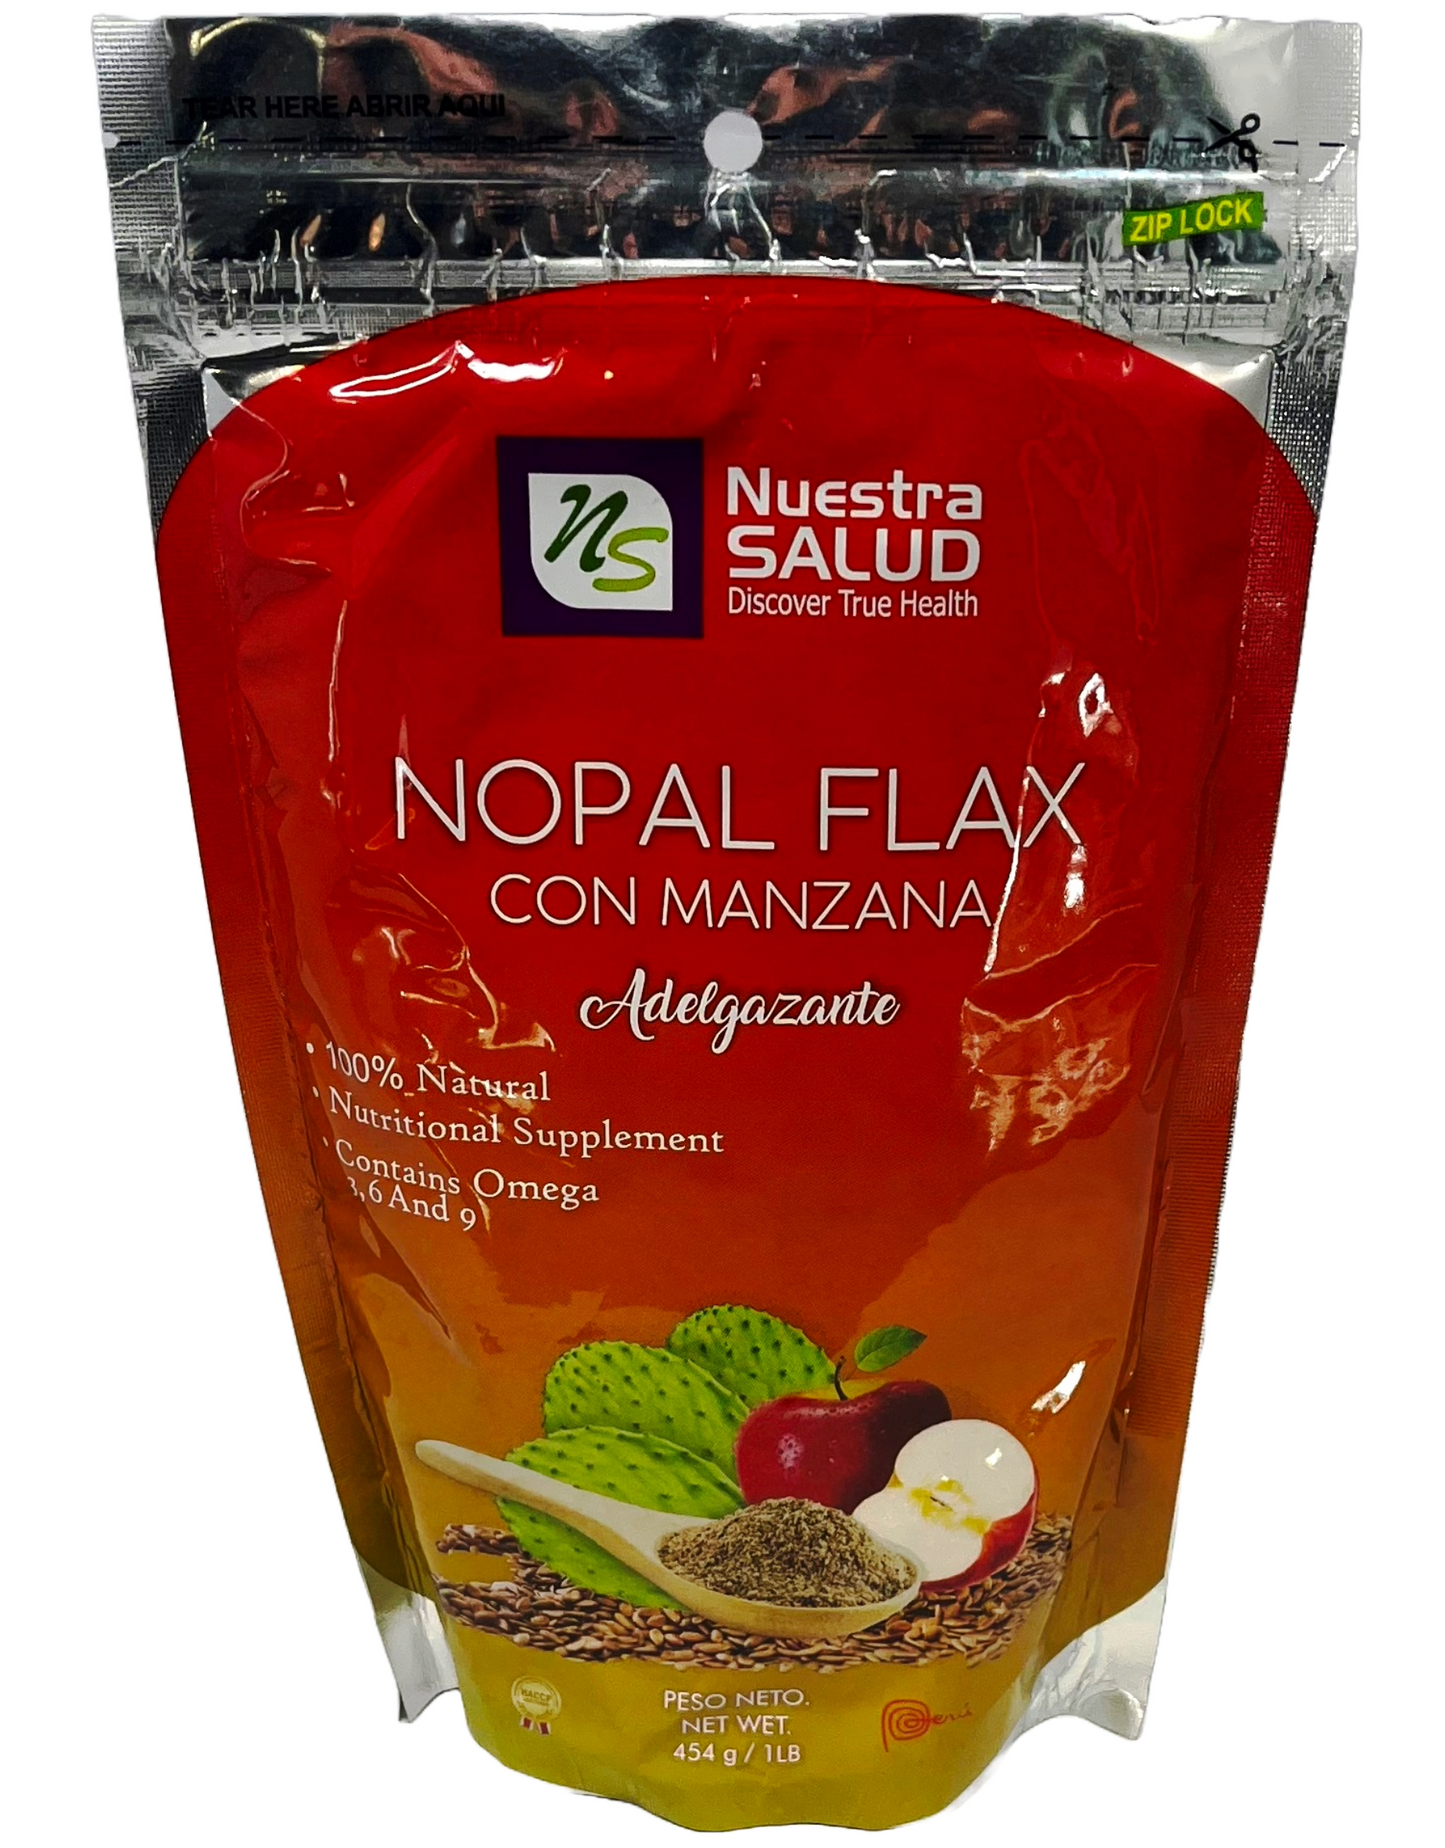 Nopal Flax Apple Plus Flaxseed Fiber (454) Colon Cleanser